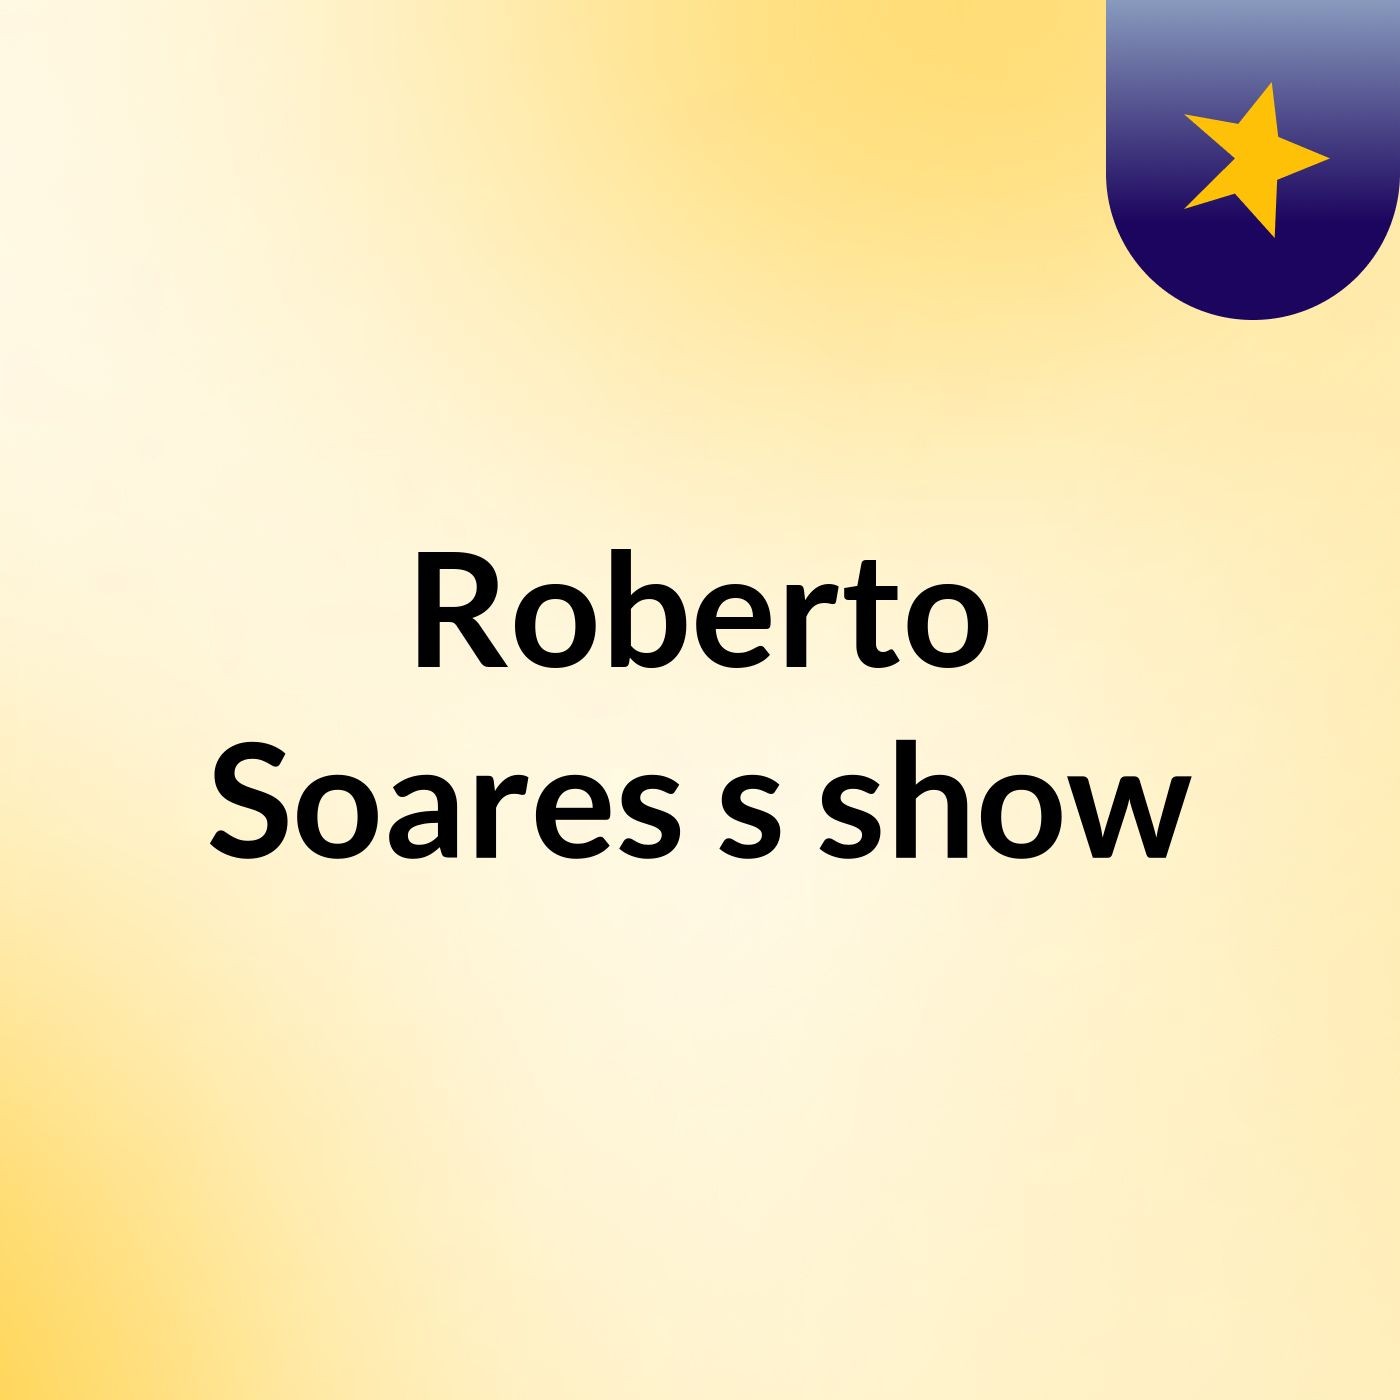 Roberto Soares's show